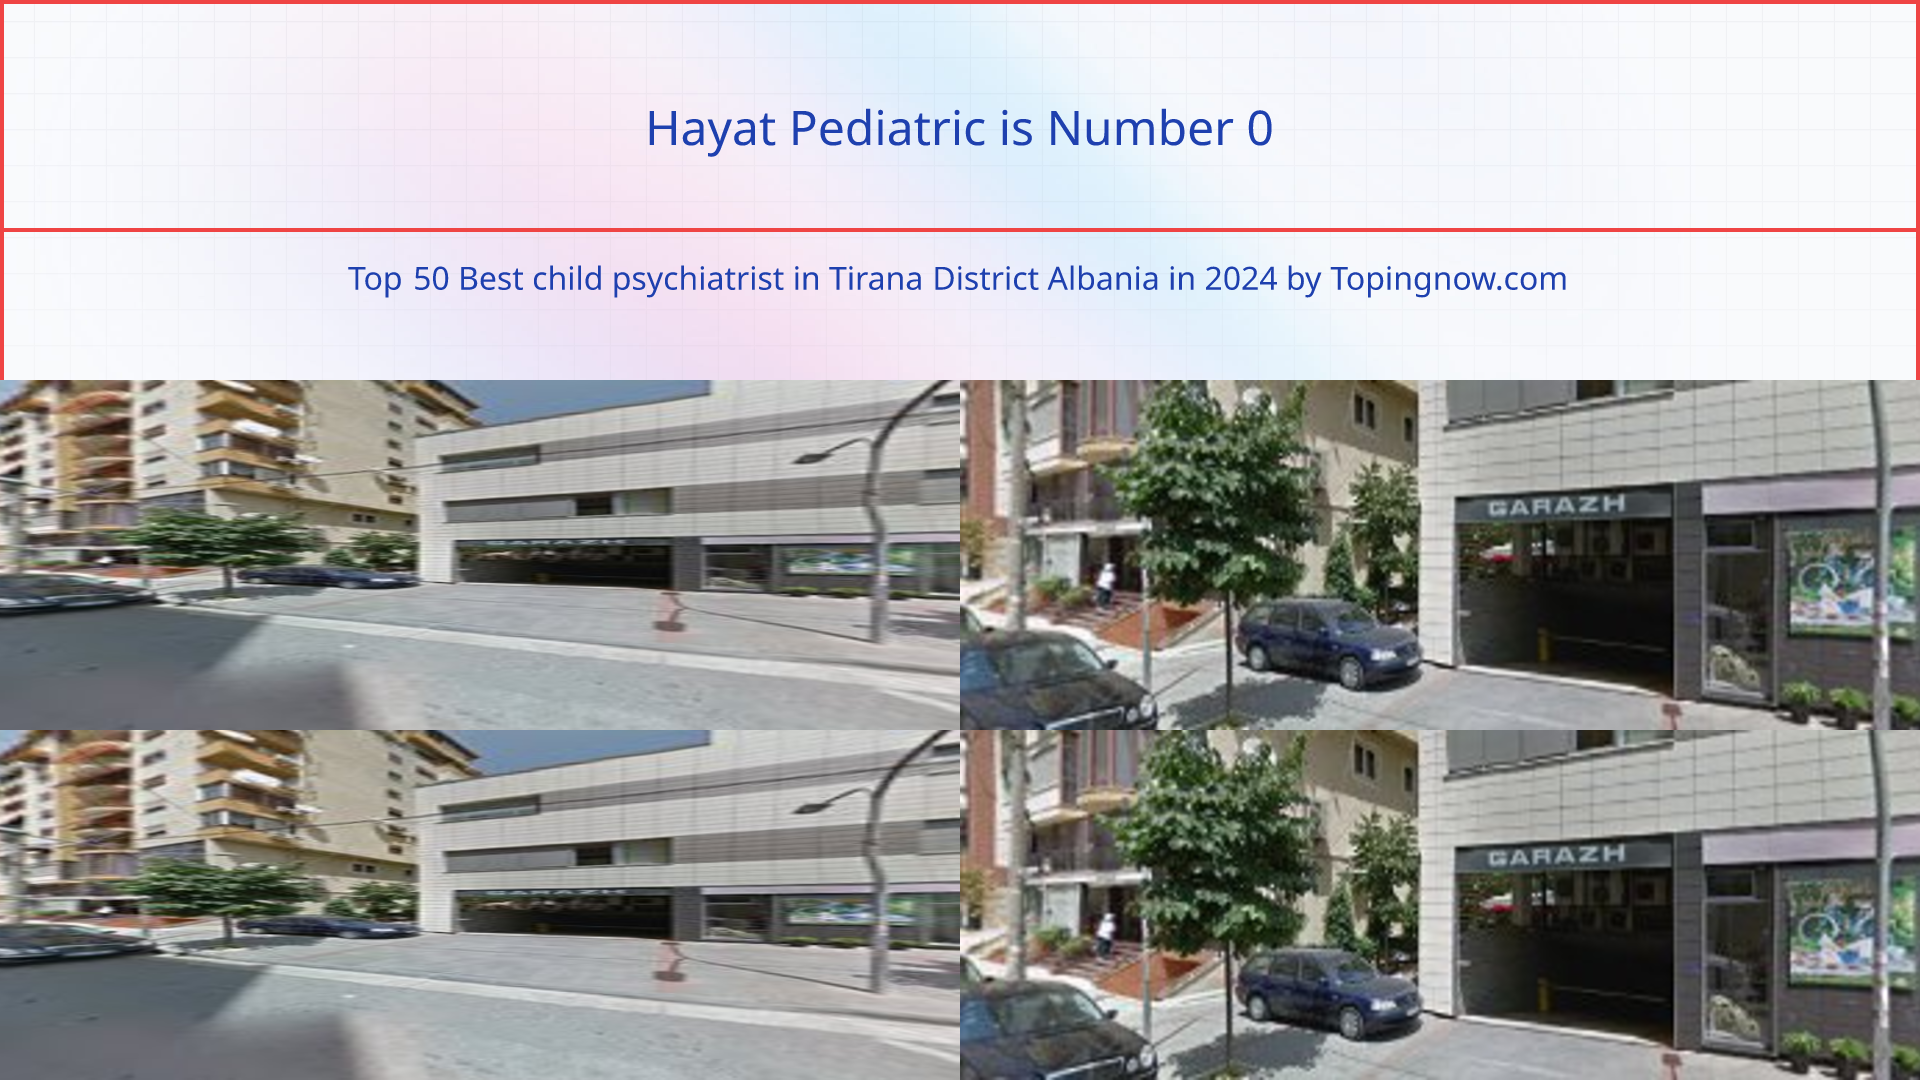 Hayat Pediatric: Top 50 Best child psychiatrist in Tirana District Albania in 2024